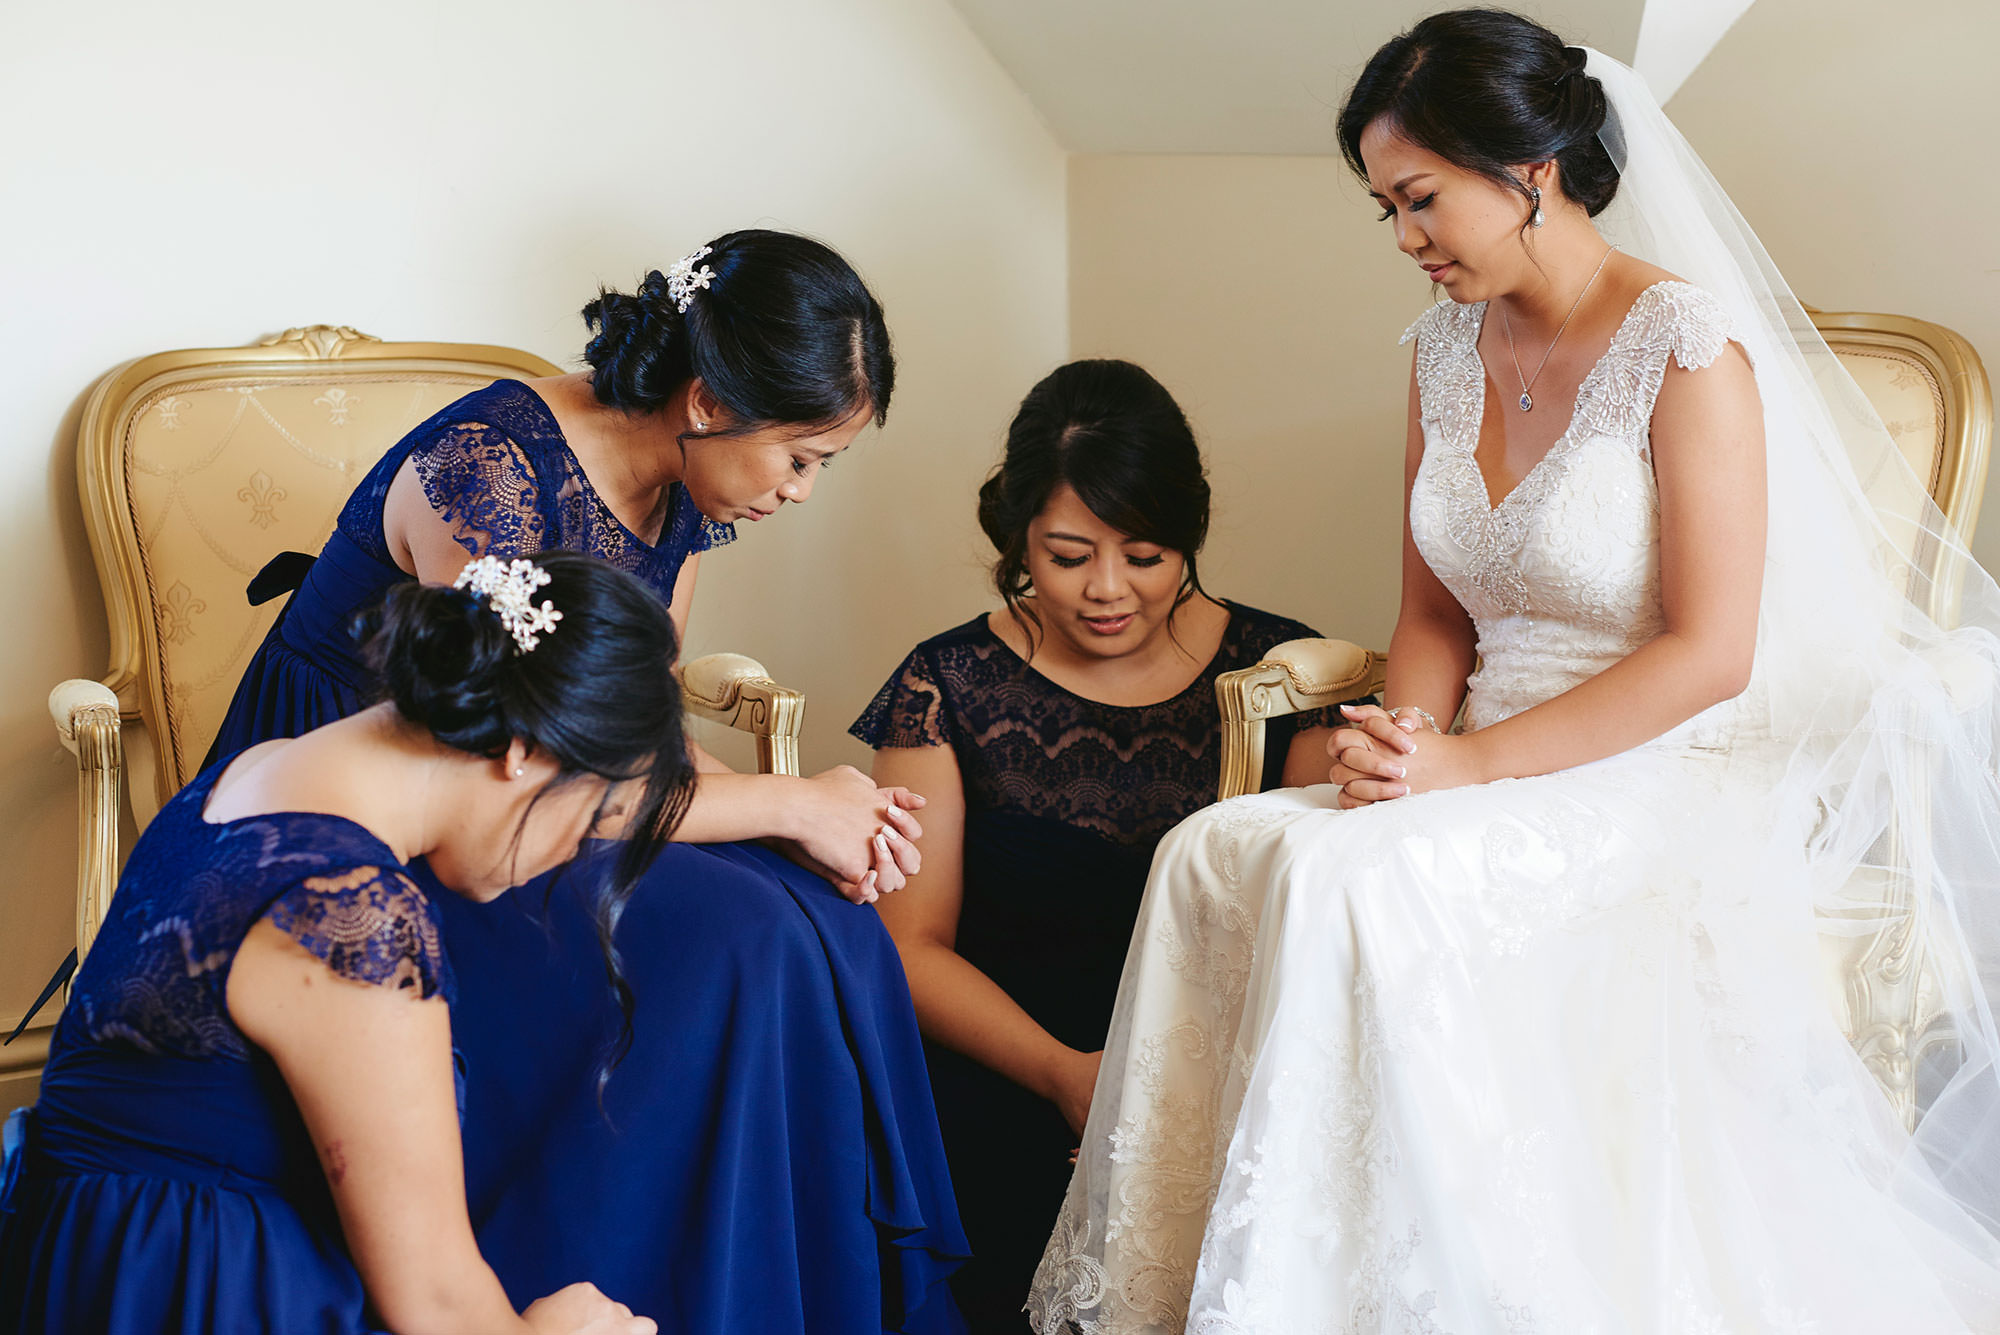 Prayers with her bridesmaids